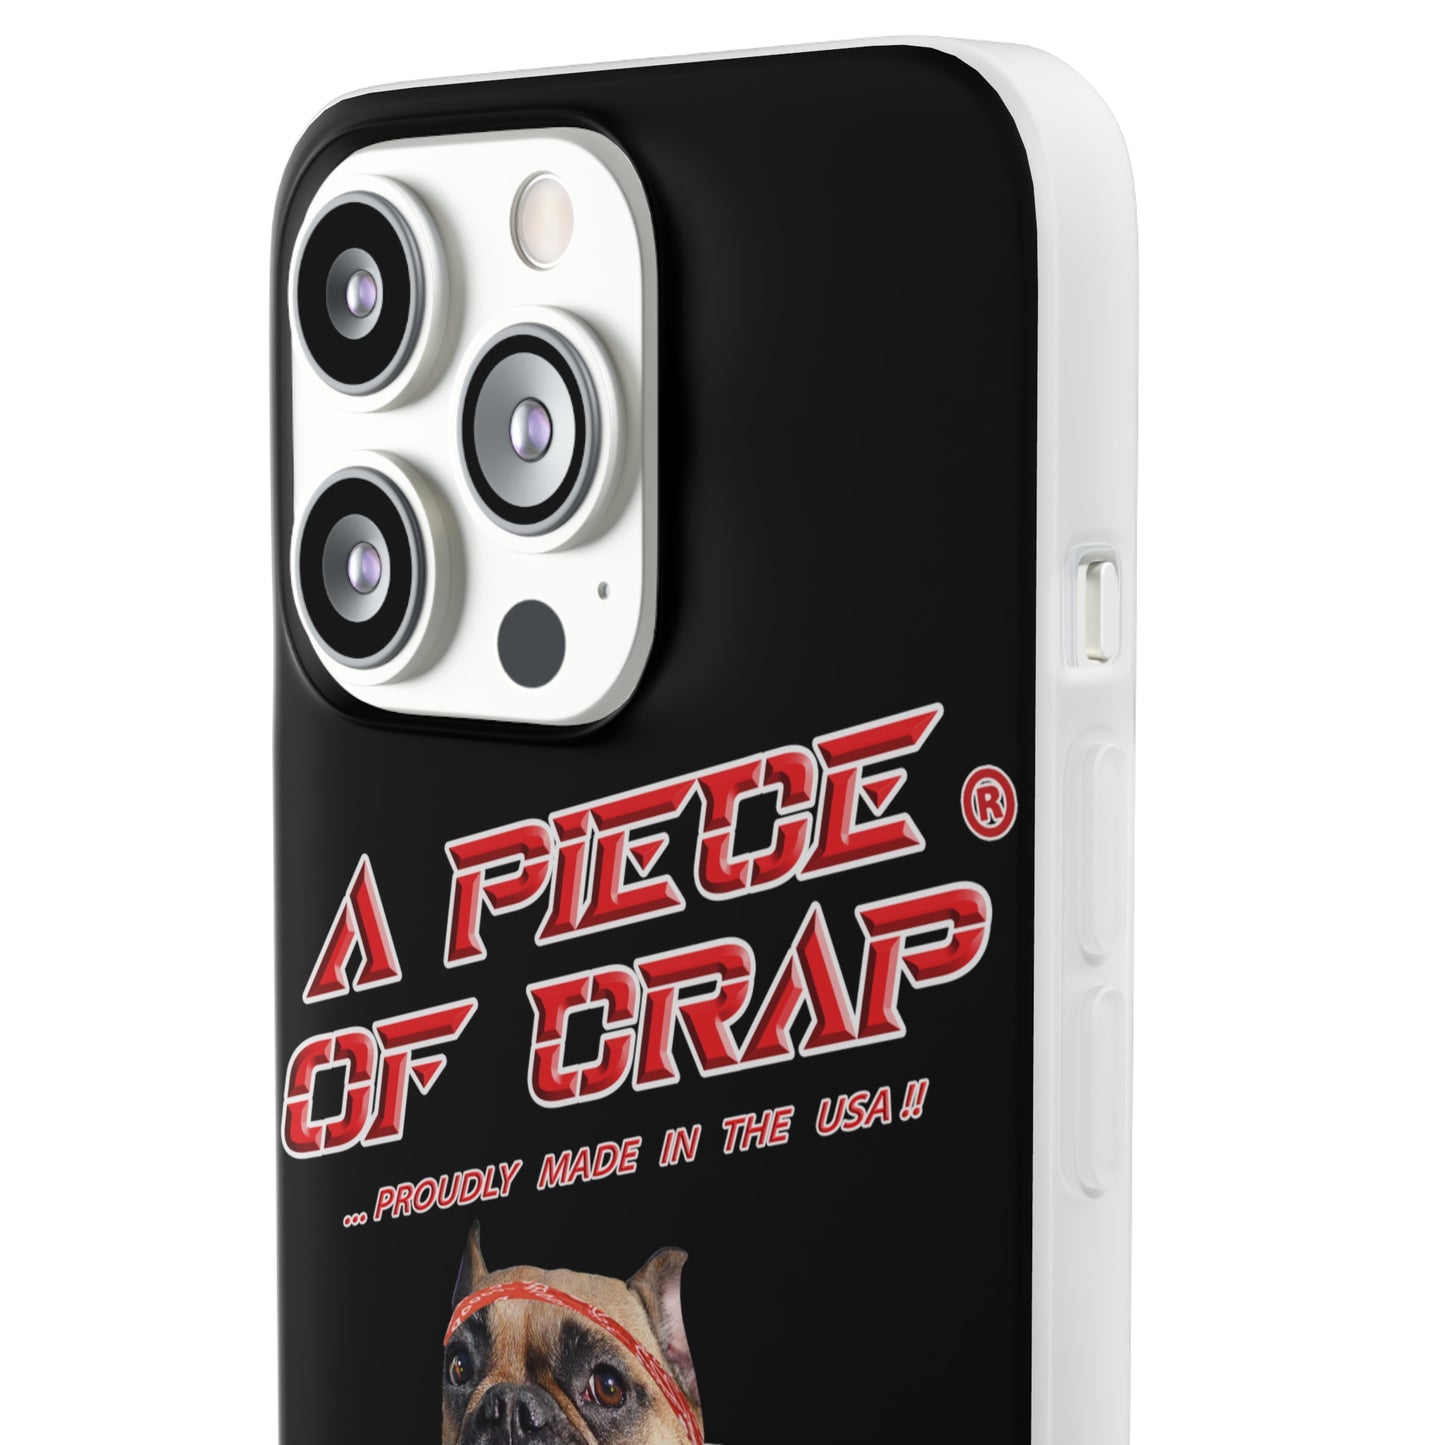 A Piece of Crap II Flexi Phone Cases